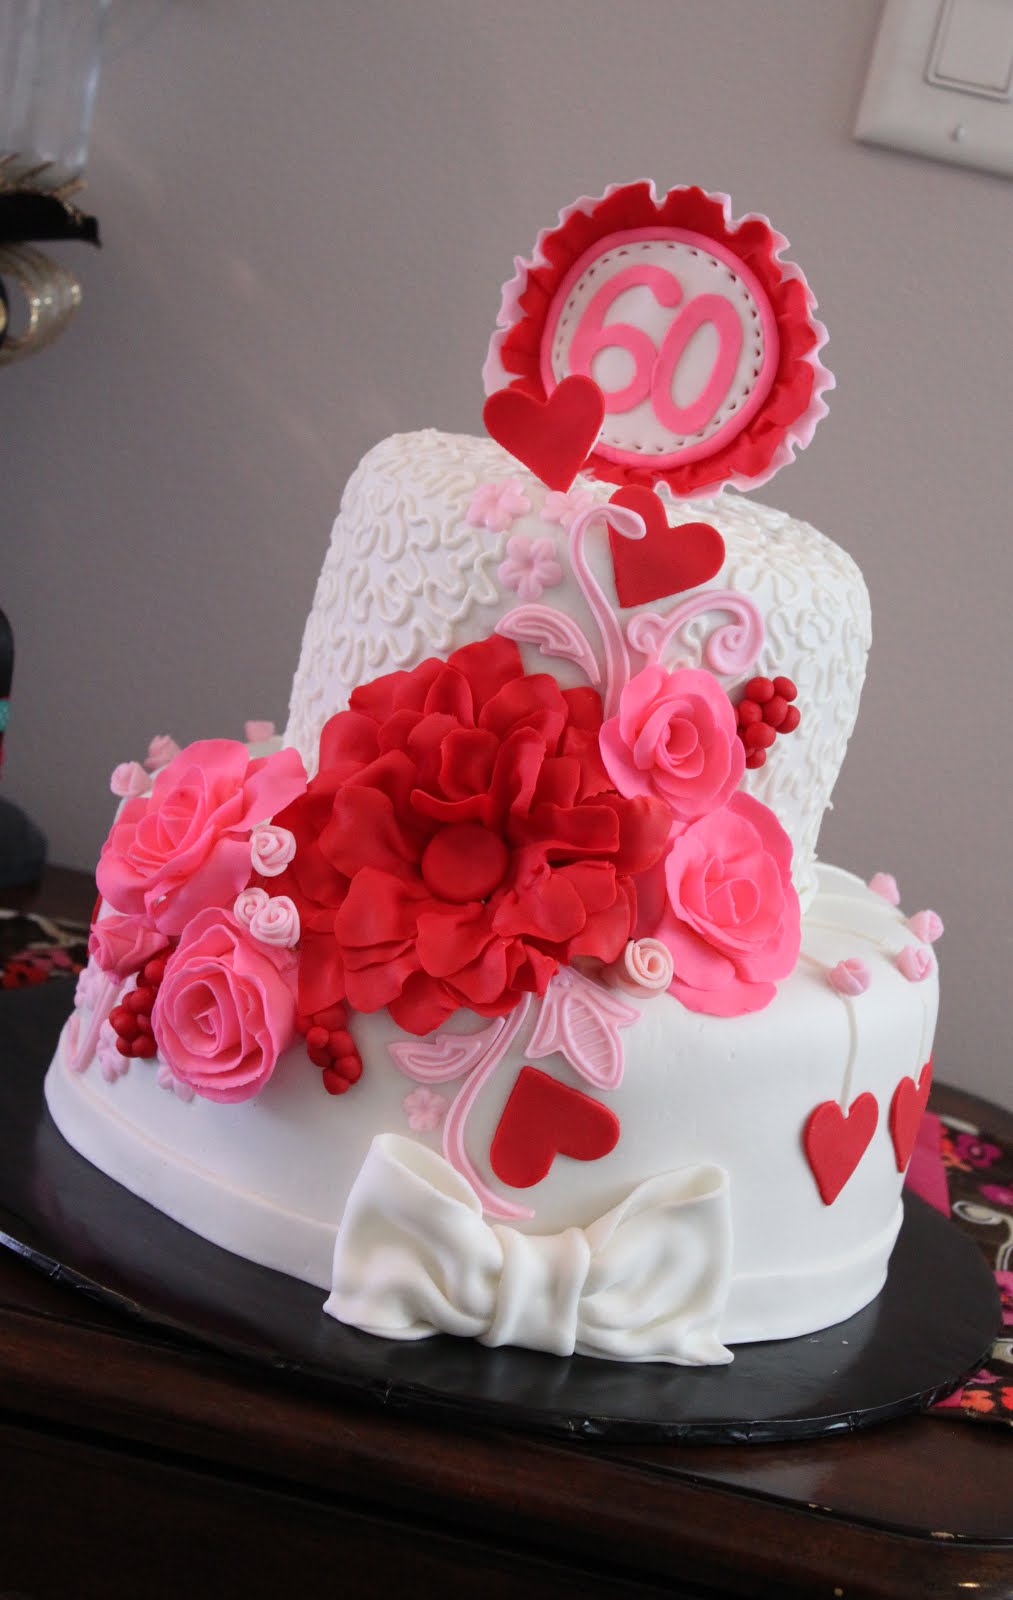 Layers of Love: Valentine 60th birthday cake